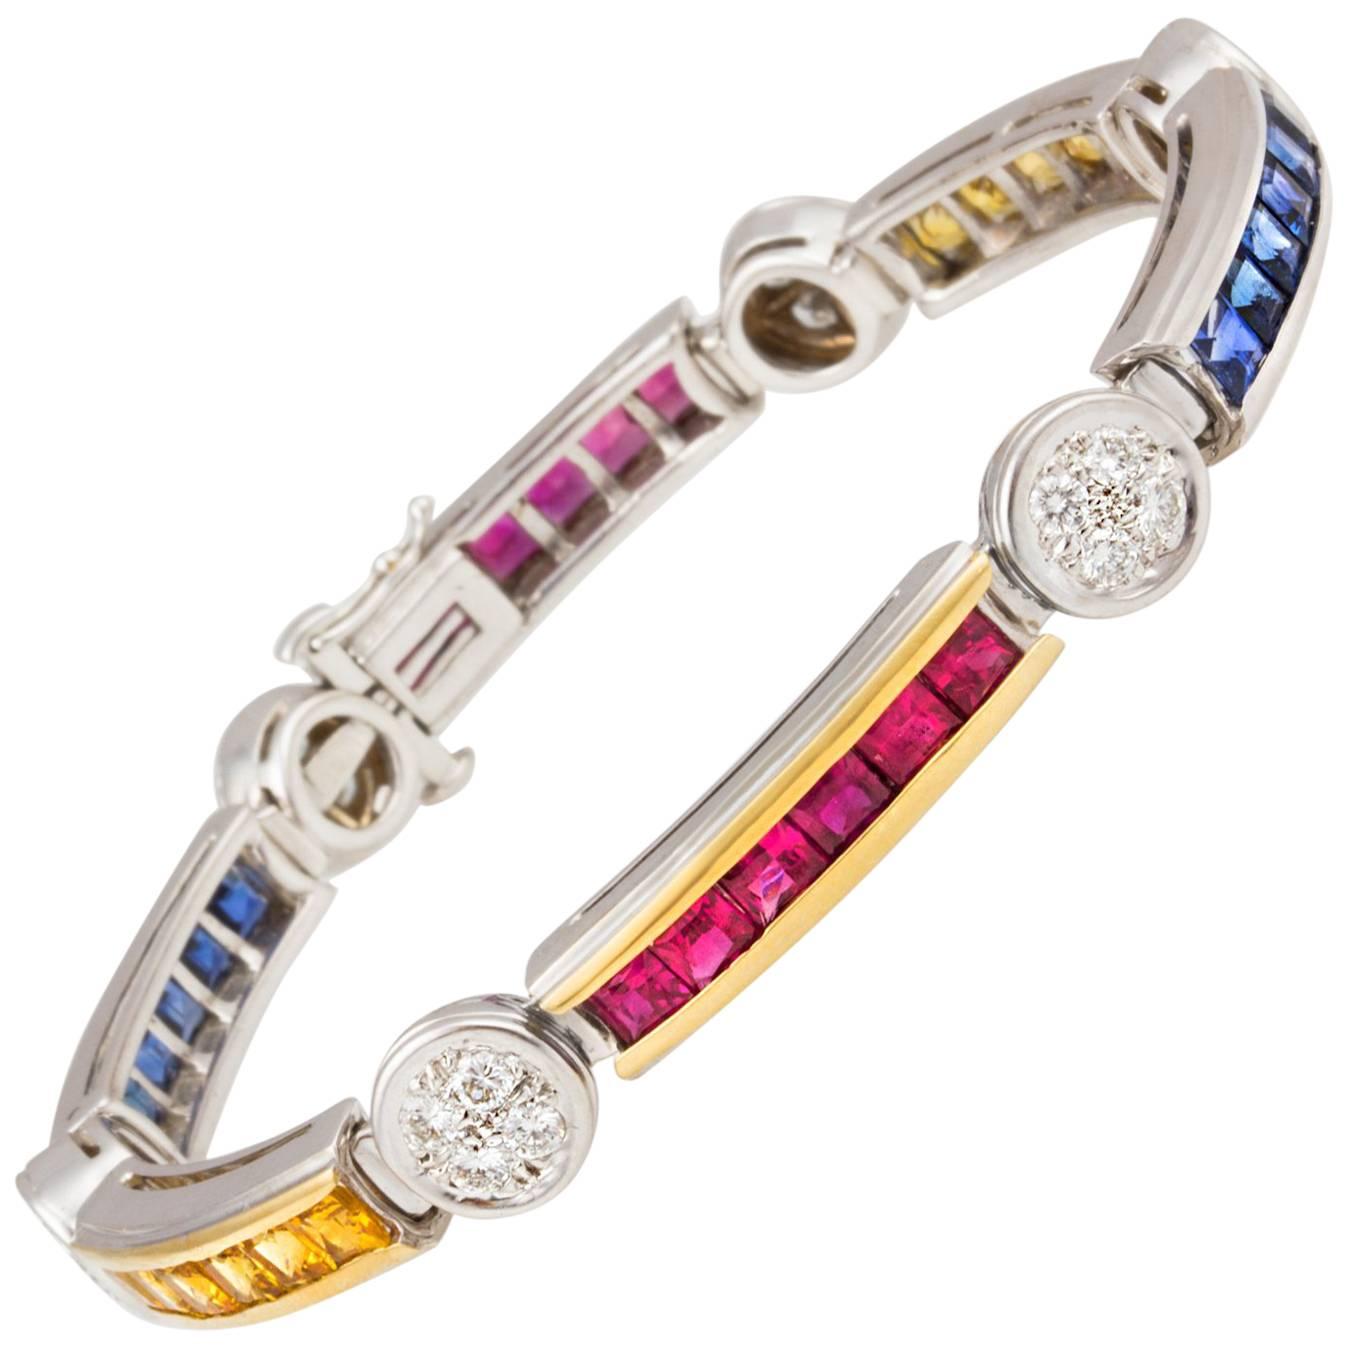 Ella Gafter Sapphire Ruby Diamond Multicolor Bracelet